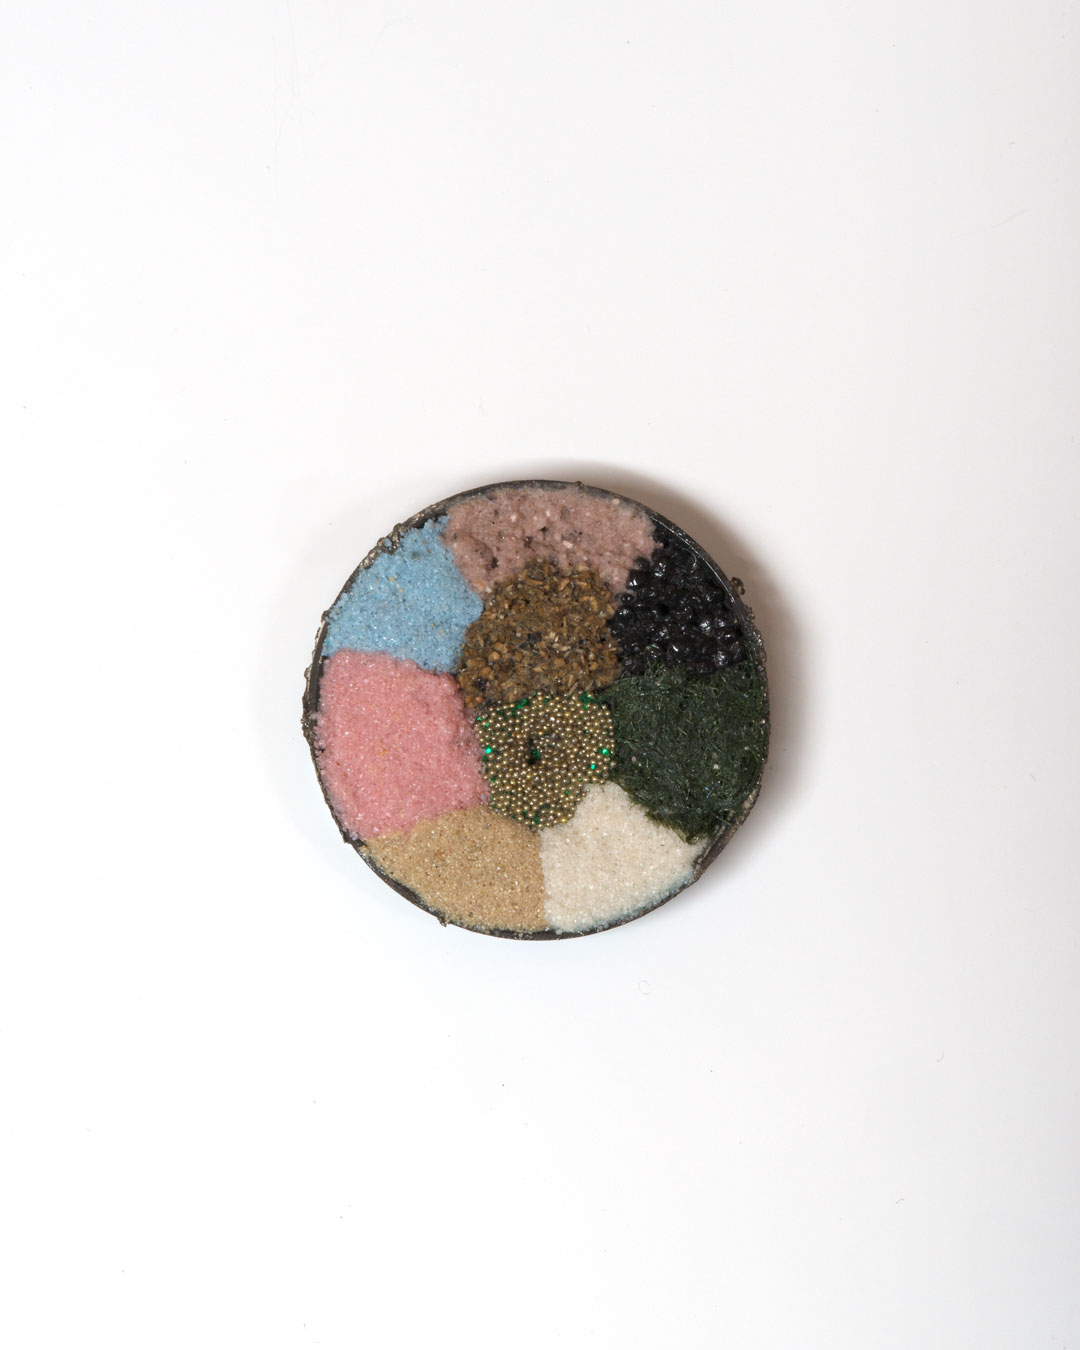 Lisa Walker, untitled, 1998, brooch; silver, sand, stones, fake grass, plastic, €3650